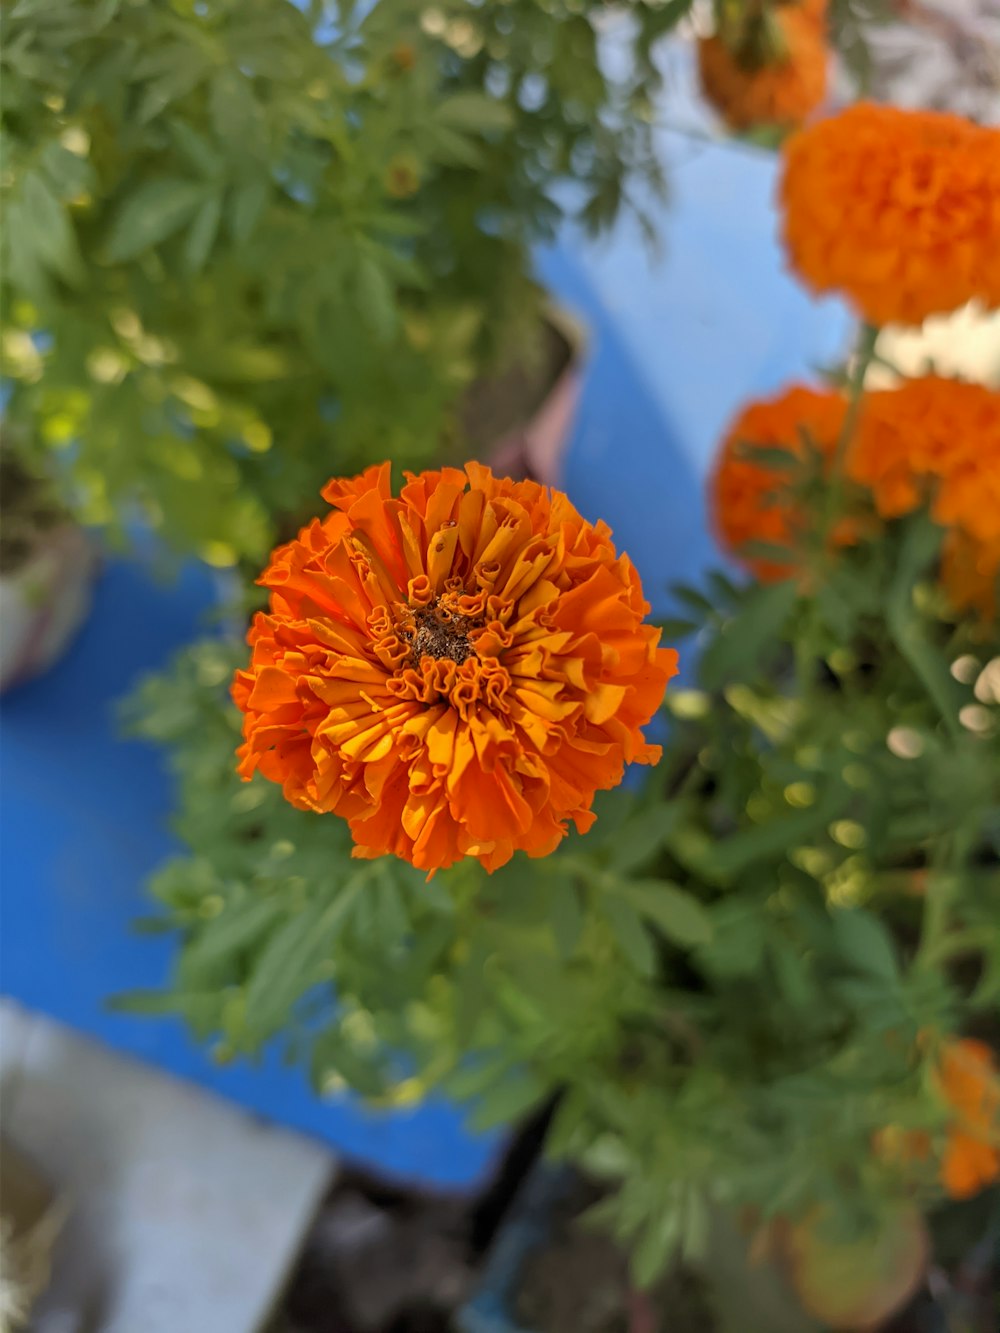 a close up of an orange flower in a pot